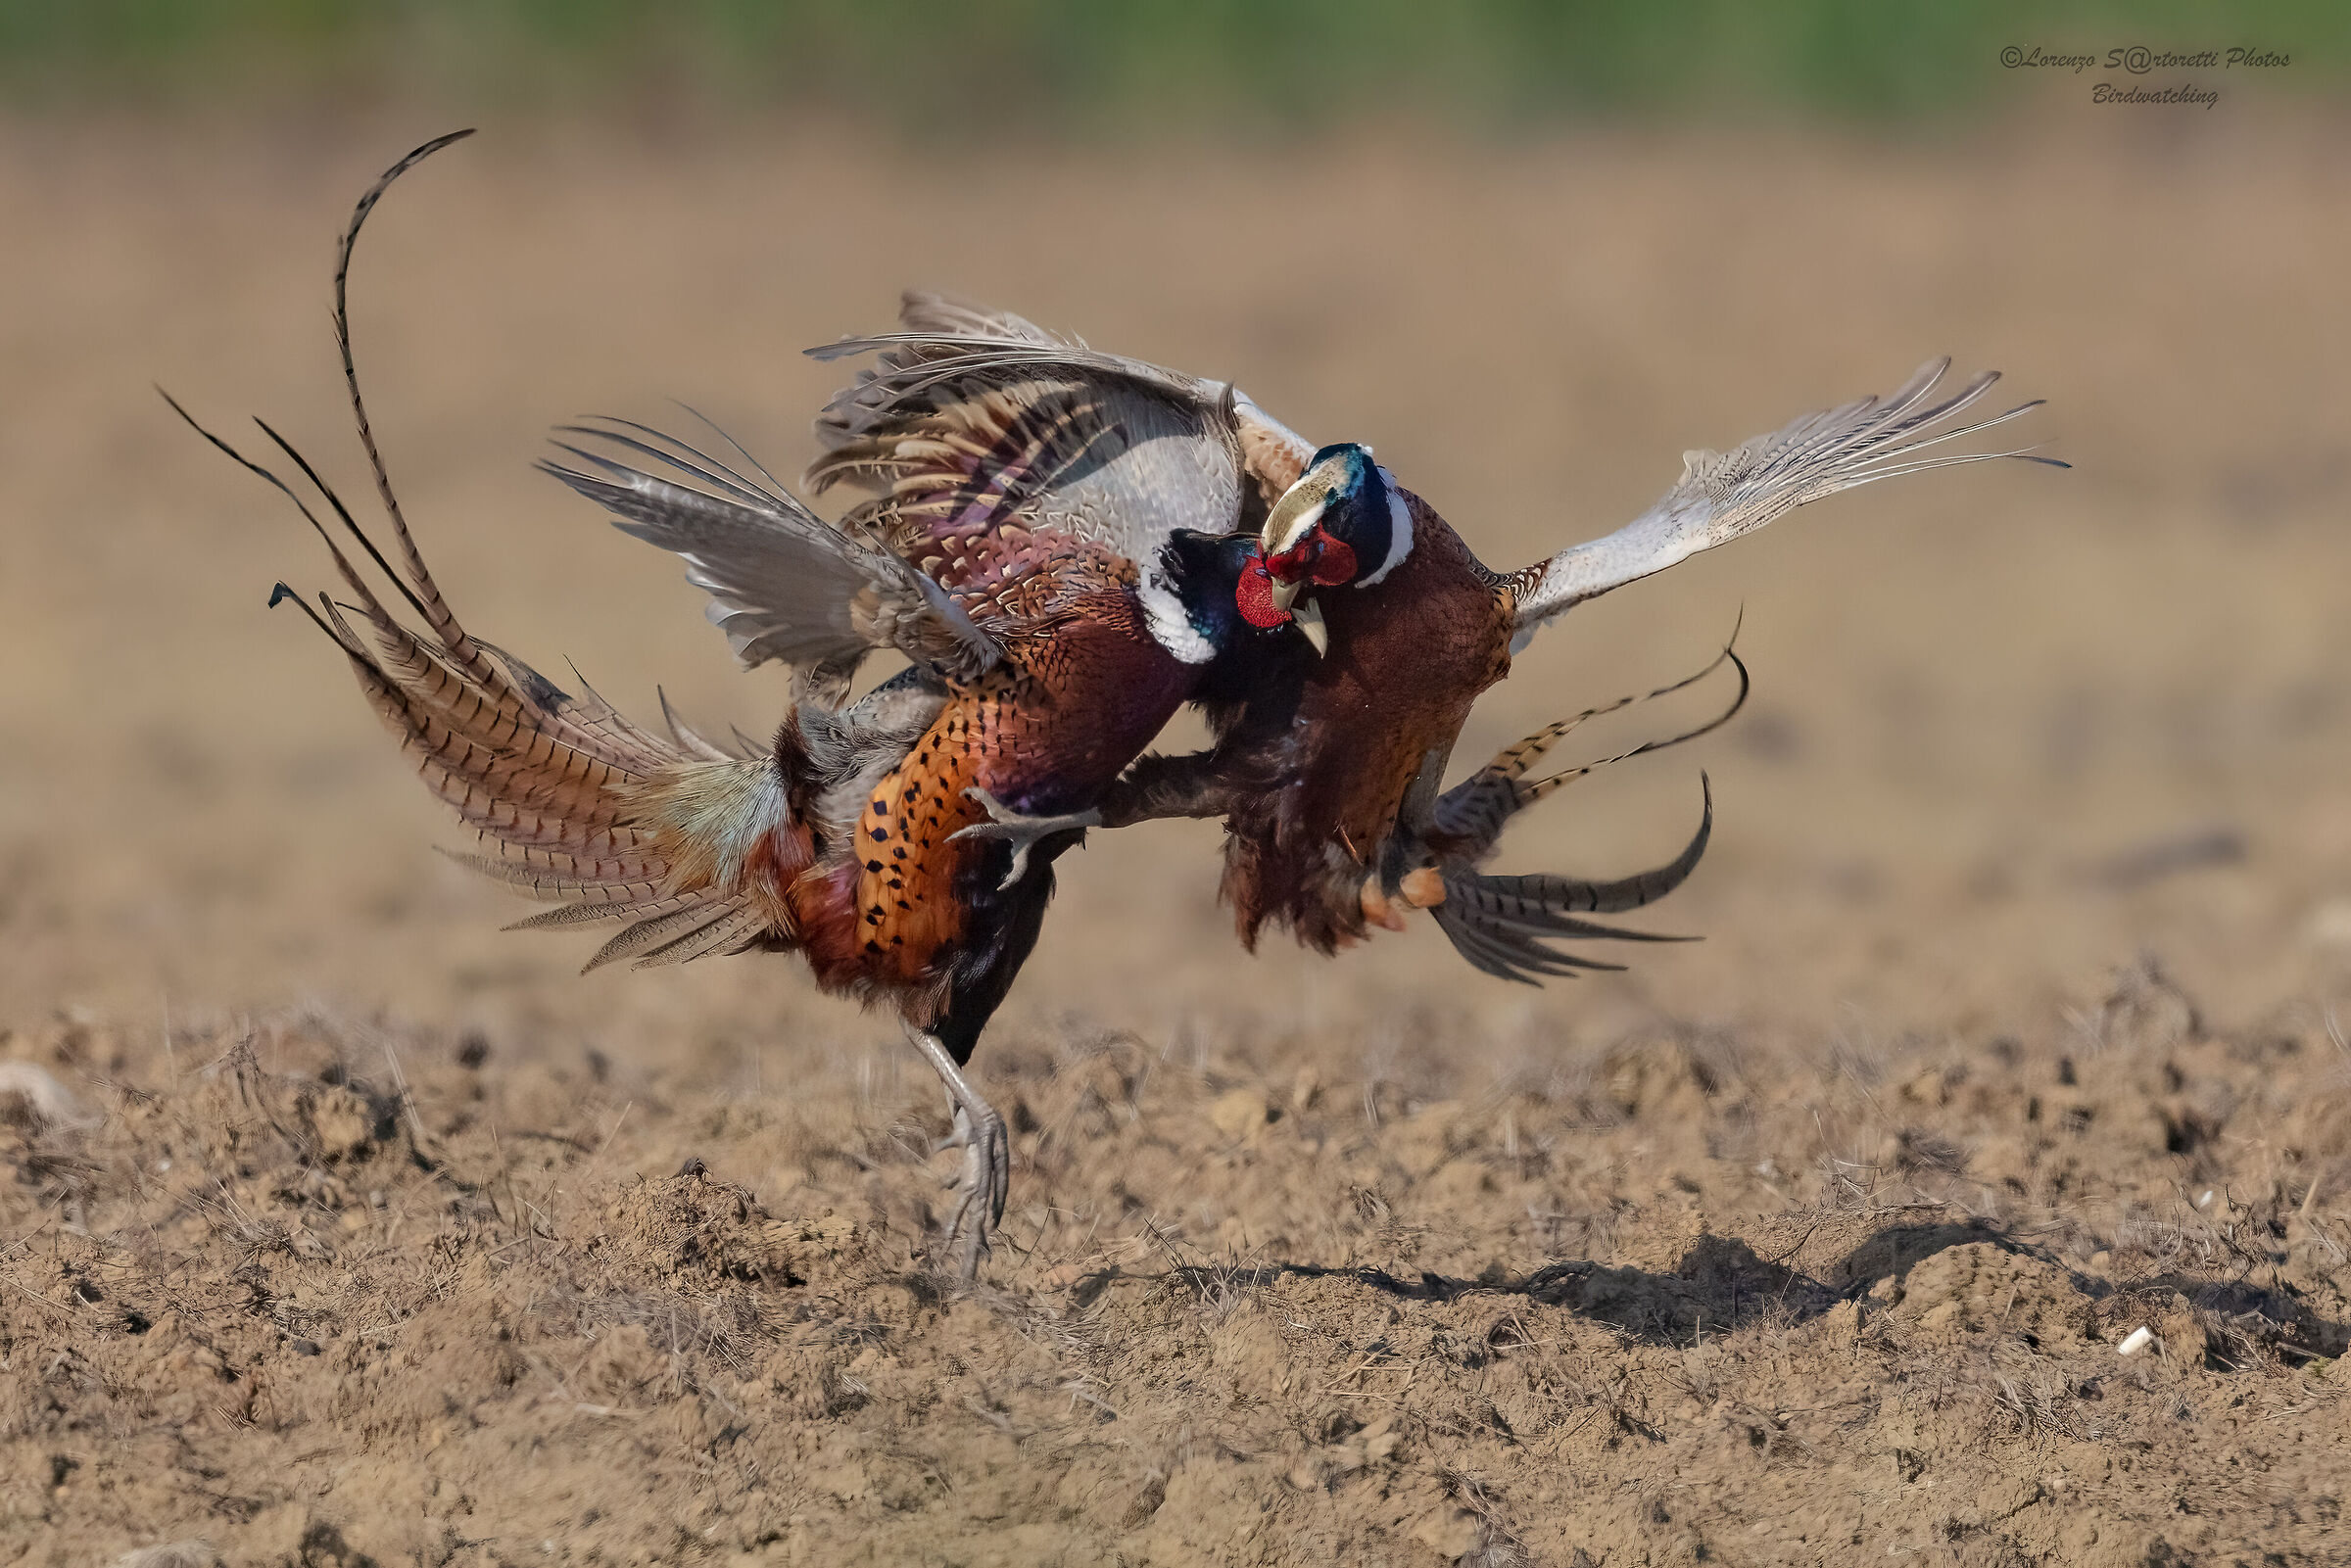 Pheasants fighting...